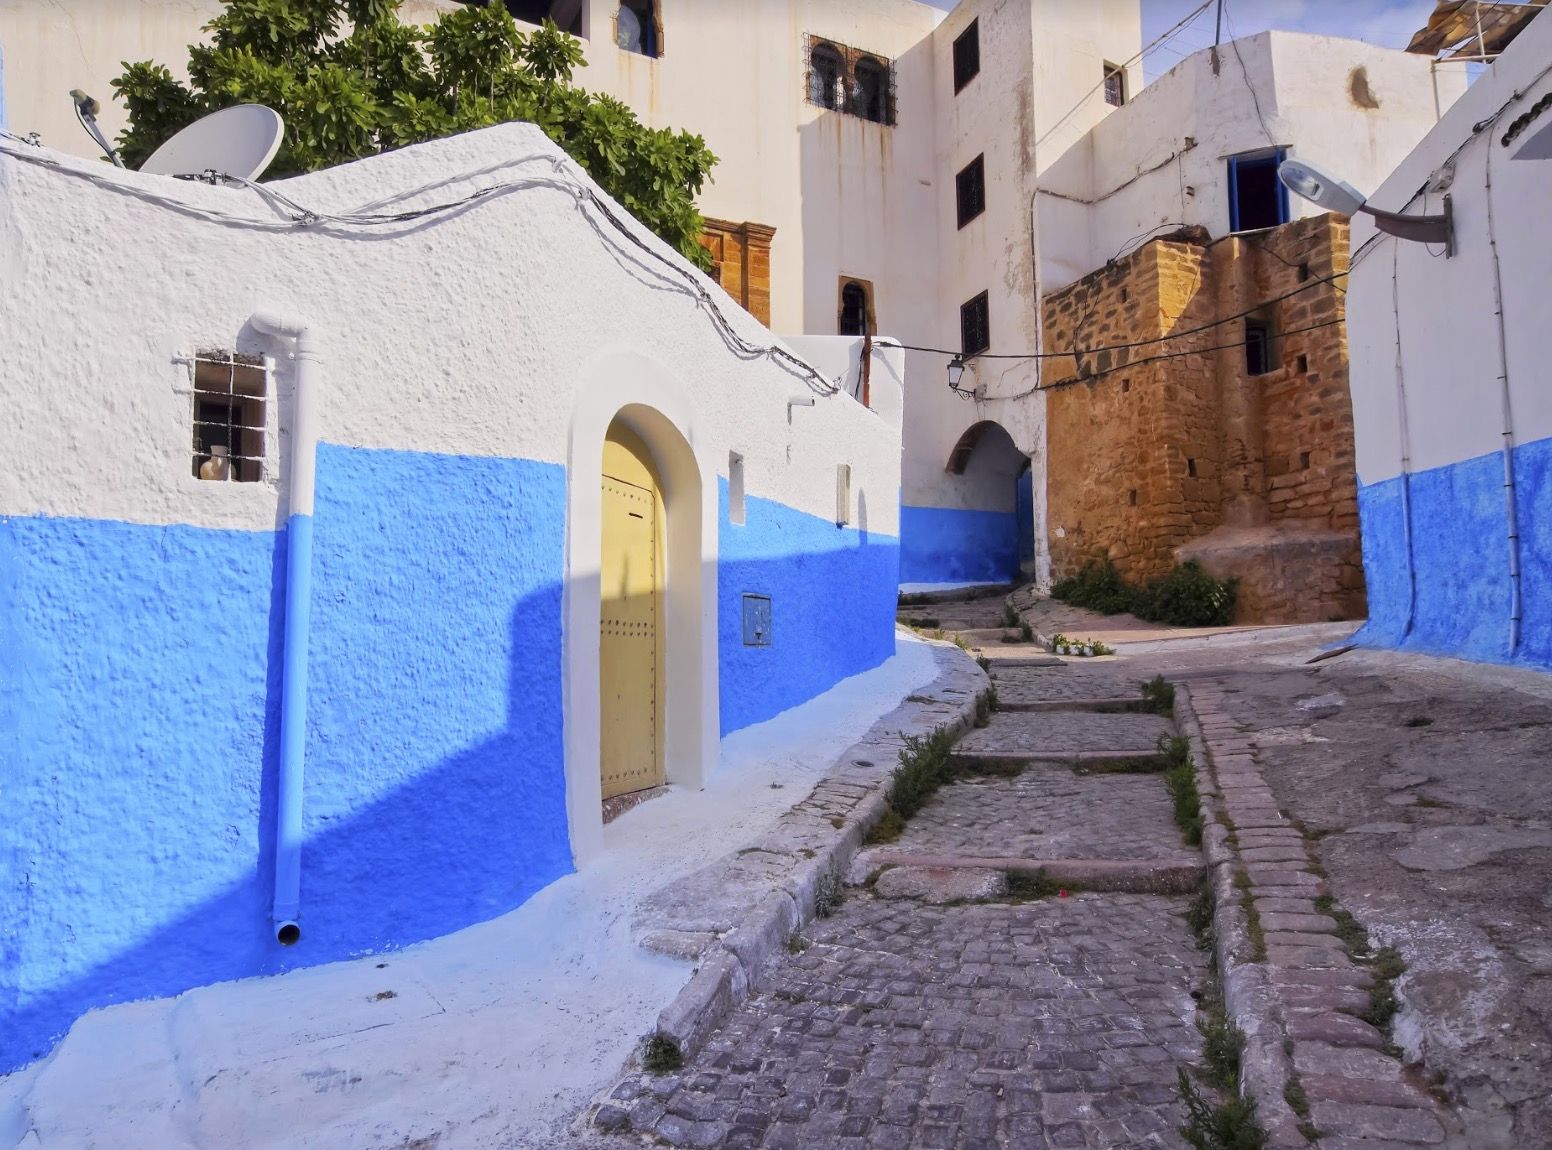 Casbah Oudaïa, Rabat - Maroc ©Thinkstock